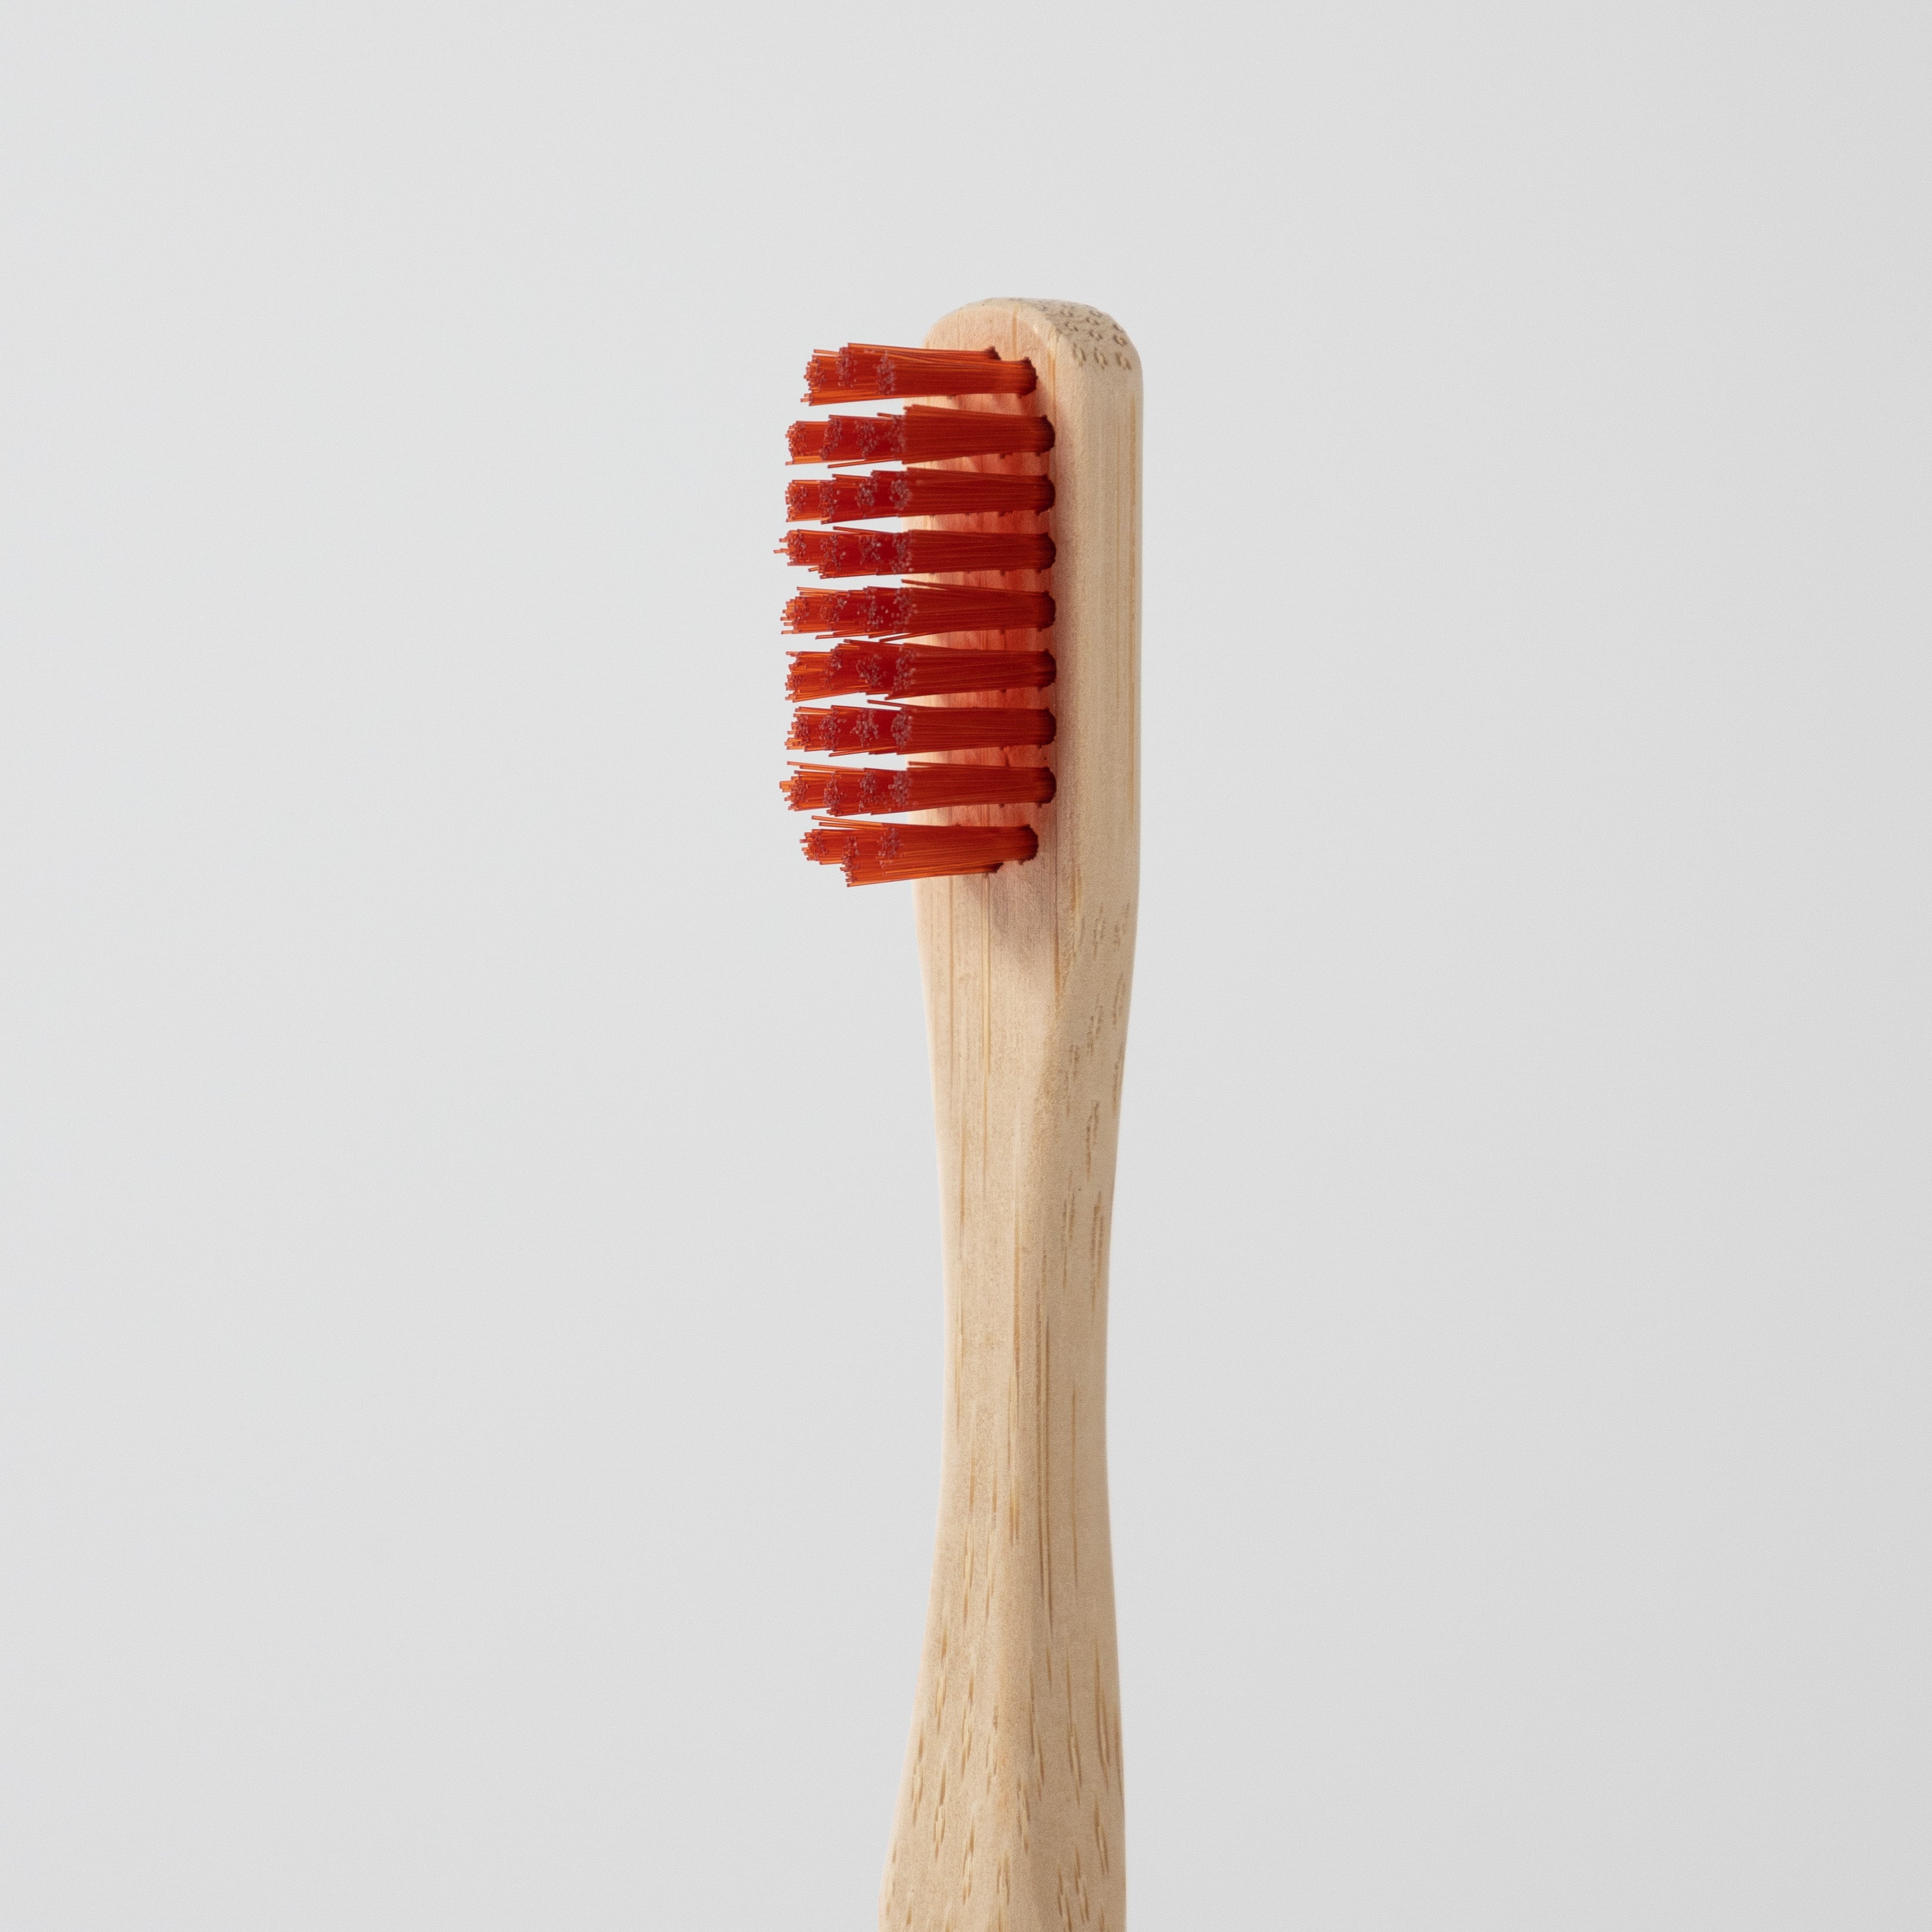 Red bristles of bamboo toothbrush